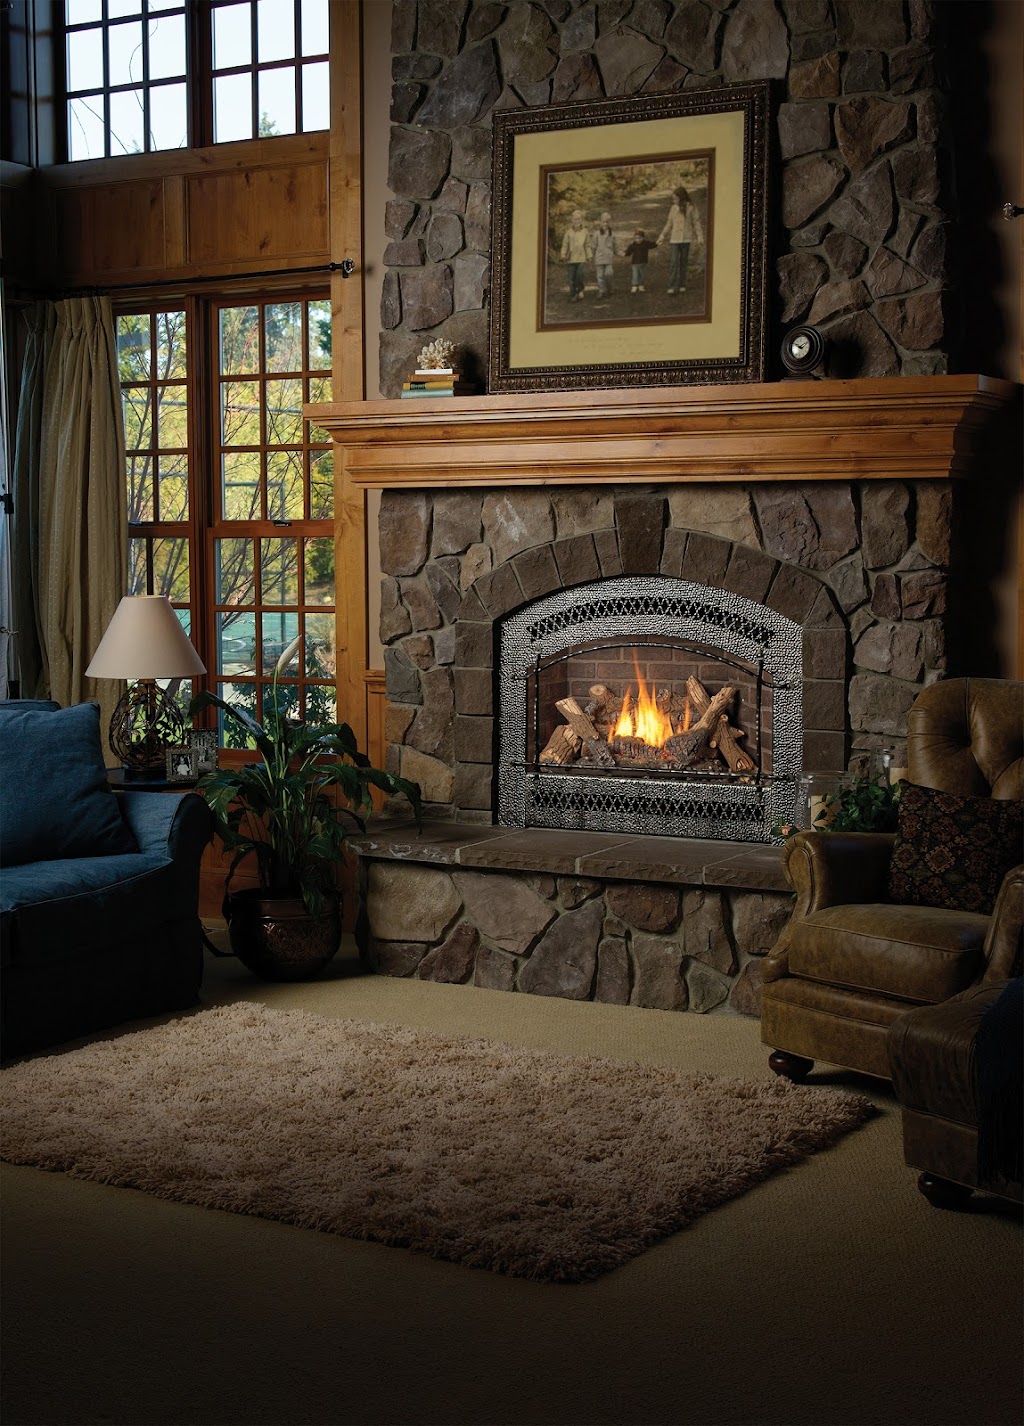 Custom Hearth Fireplaces & Stoves | 3301 WA-16, Port Orchard, WA 98367, USA | Phone: (360) 373-3941